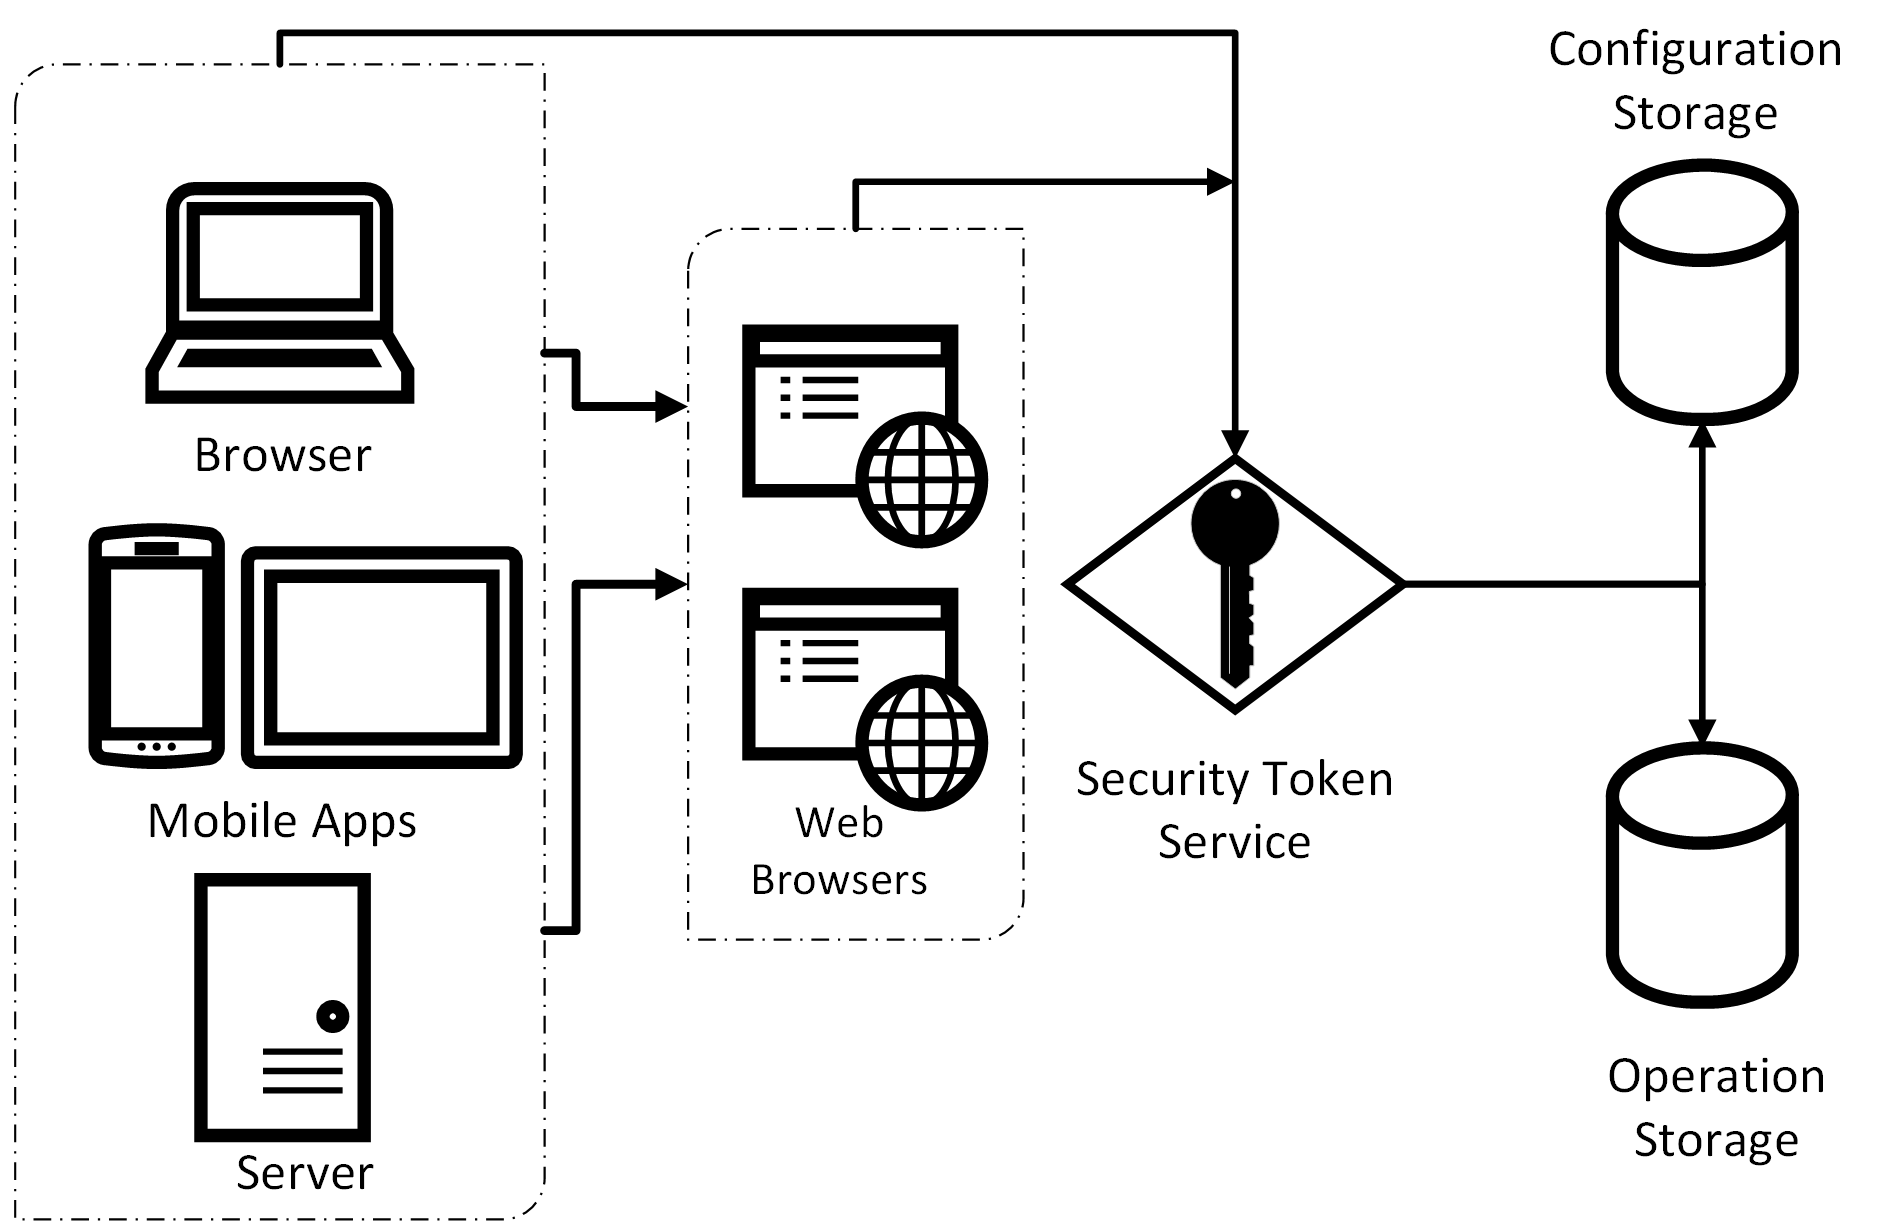 Security Token Service Usage